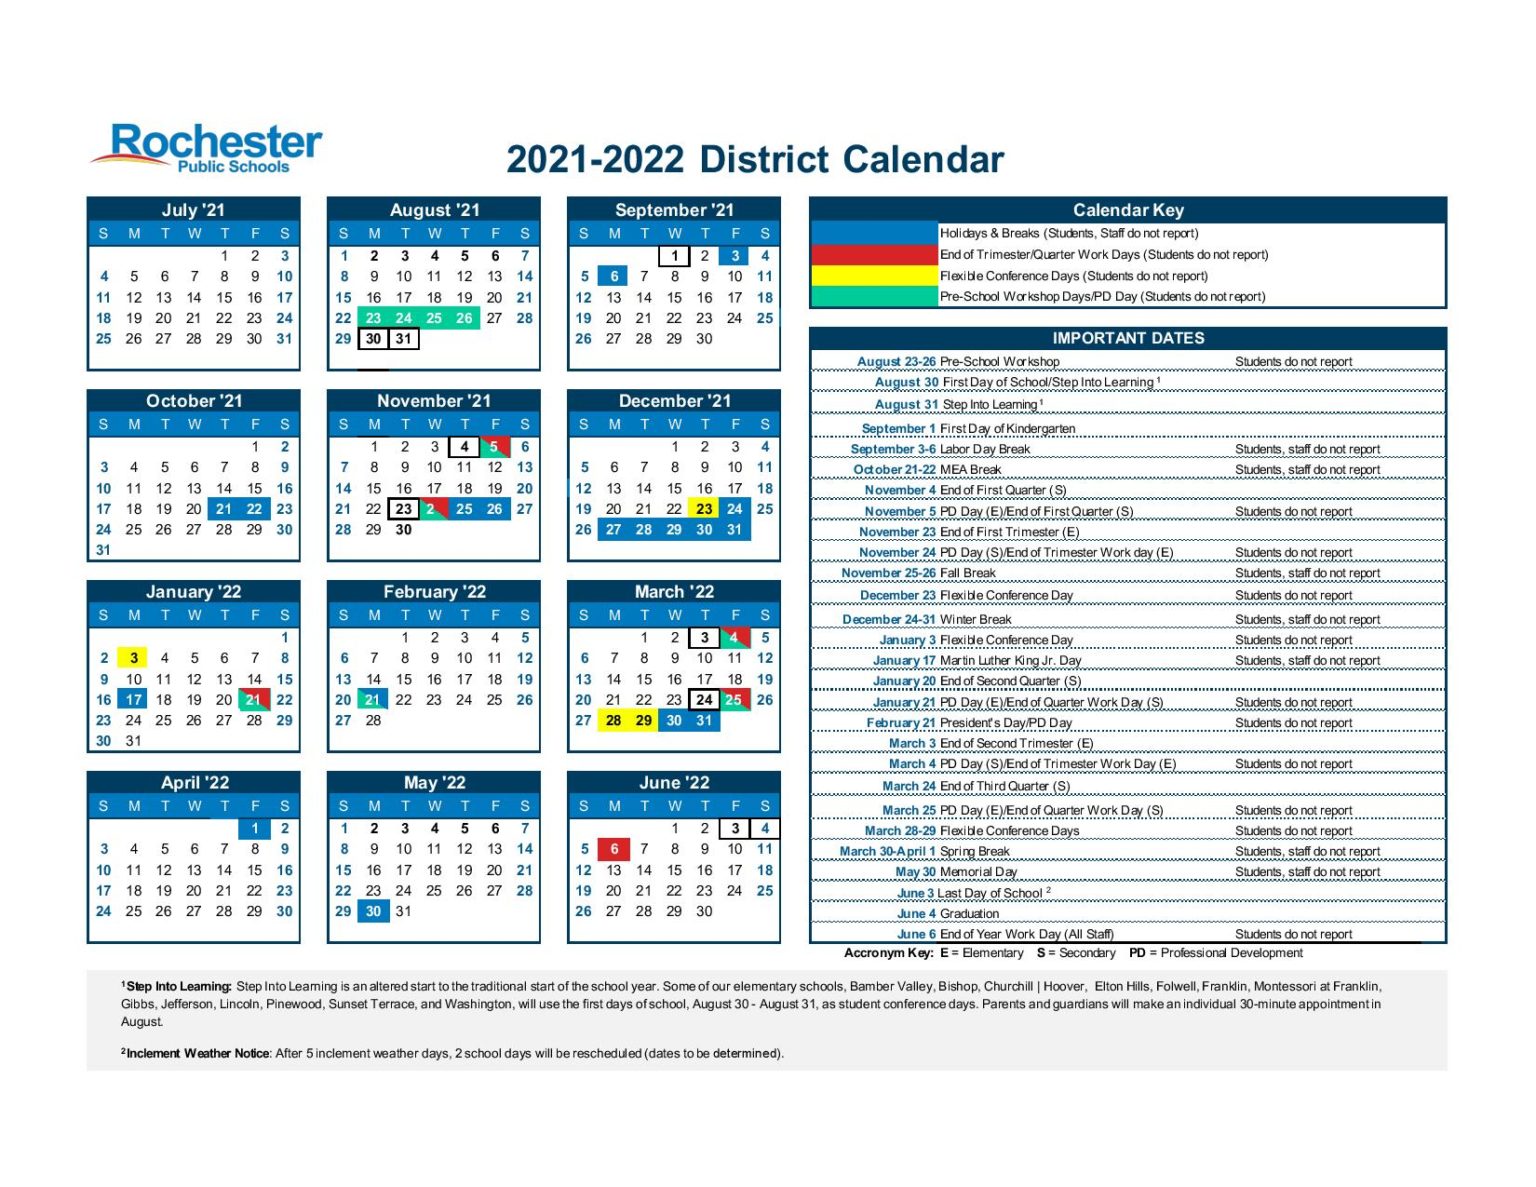 Rochester Public Schools Calendar 2021 2022 in PDF